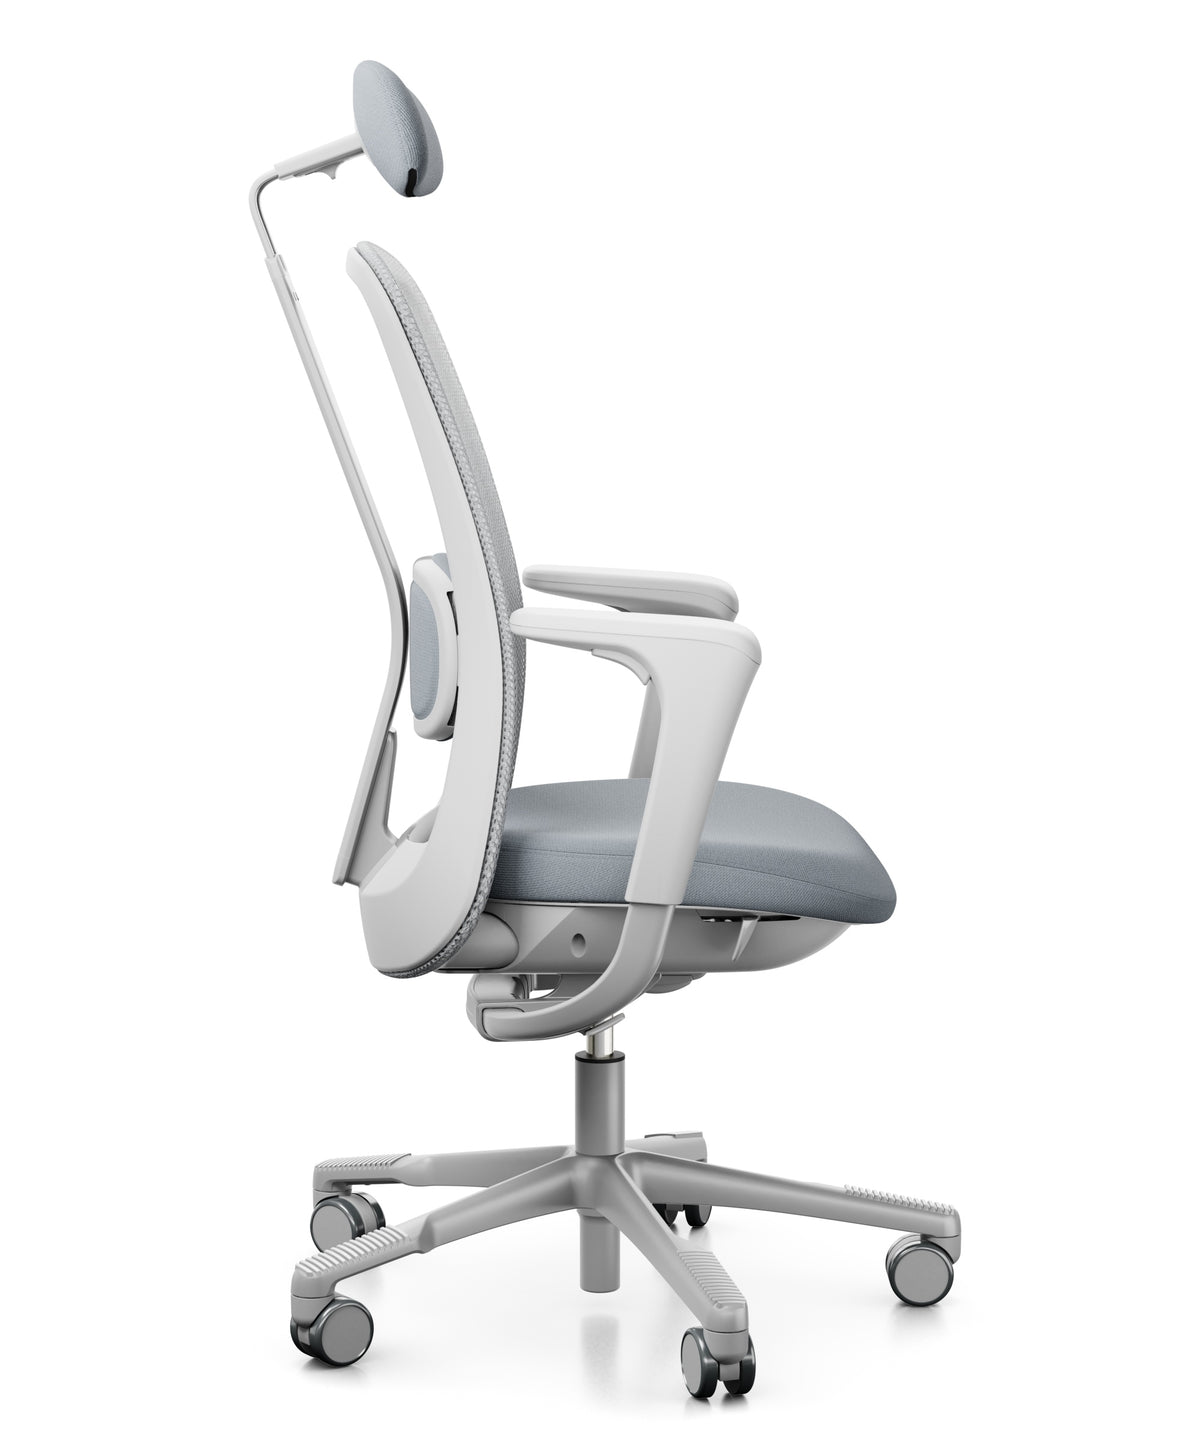 HÅG SoFi Mesh 7500 Ergonomic Office Chair with Headrest - Light Grey